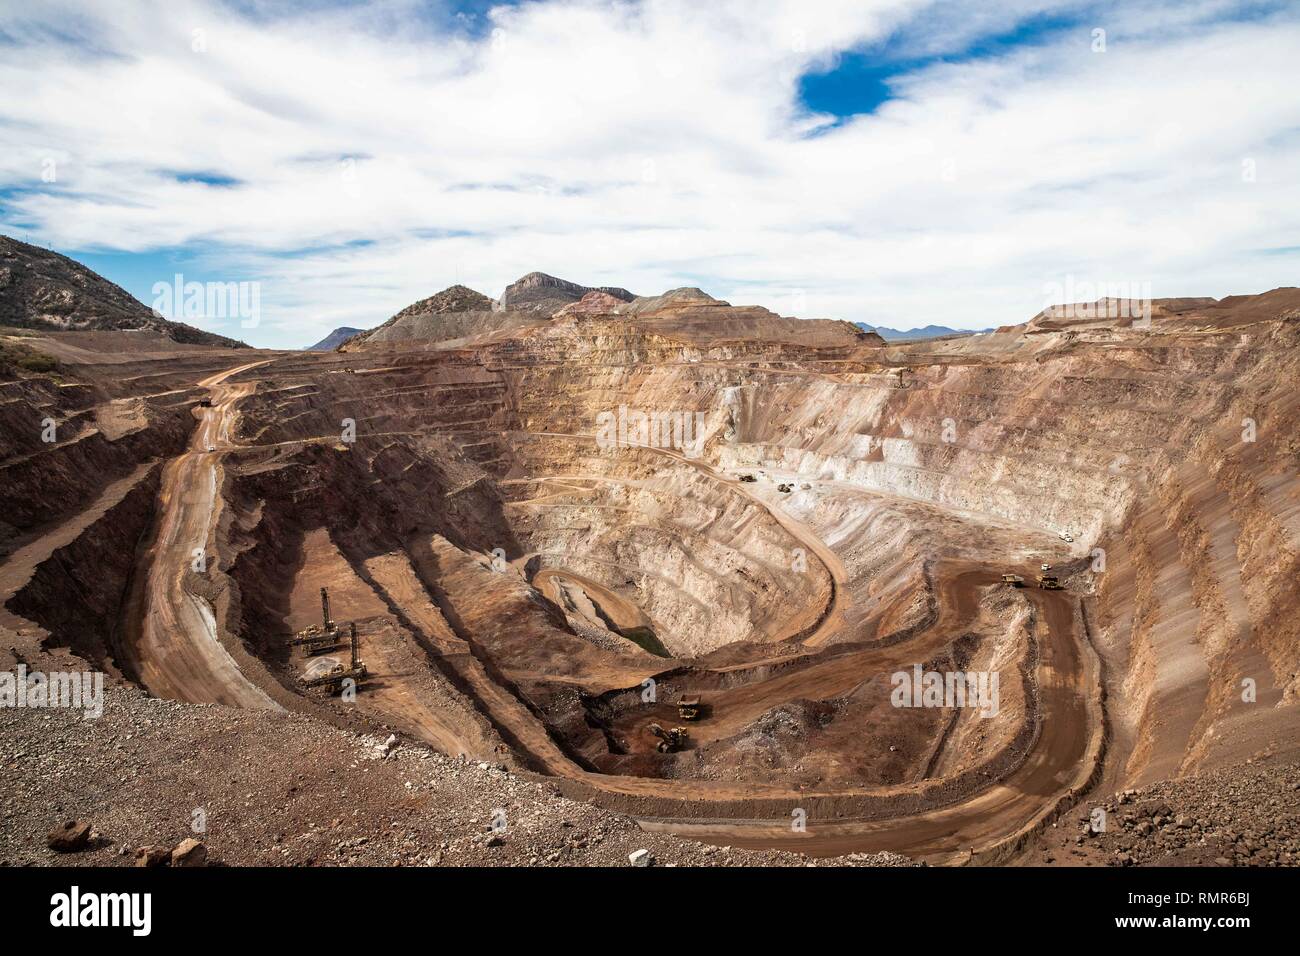 Vue panoramique de la mine à ciel ouvert de la mine d'or dans la région de Sonora, Mexique. vista panoramica del Tajo en abiernto un cielo mina de oro en Sonora, Mexique. Banque D'Images